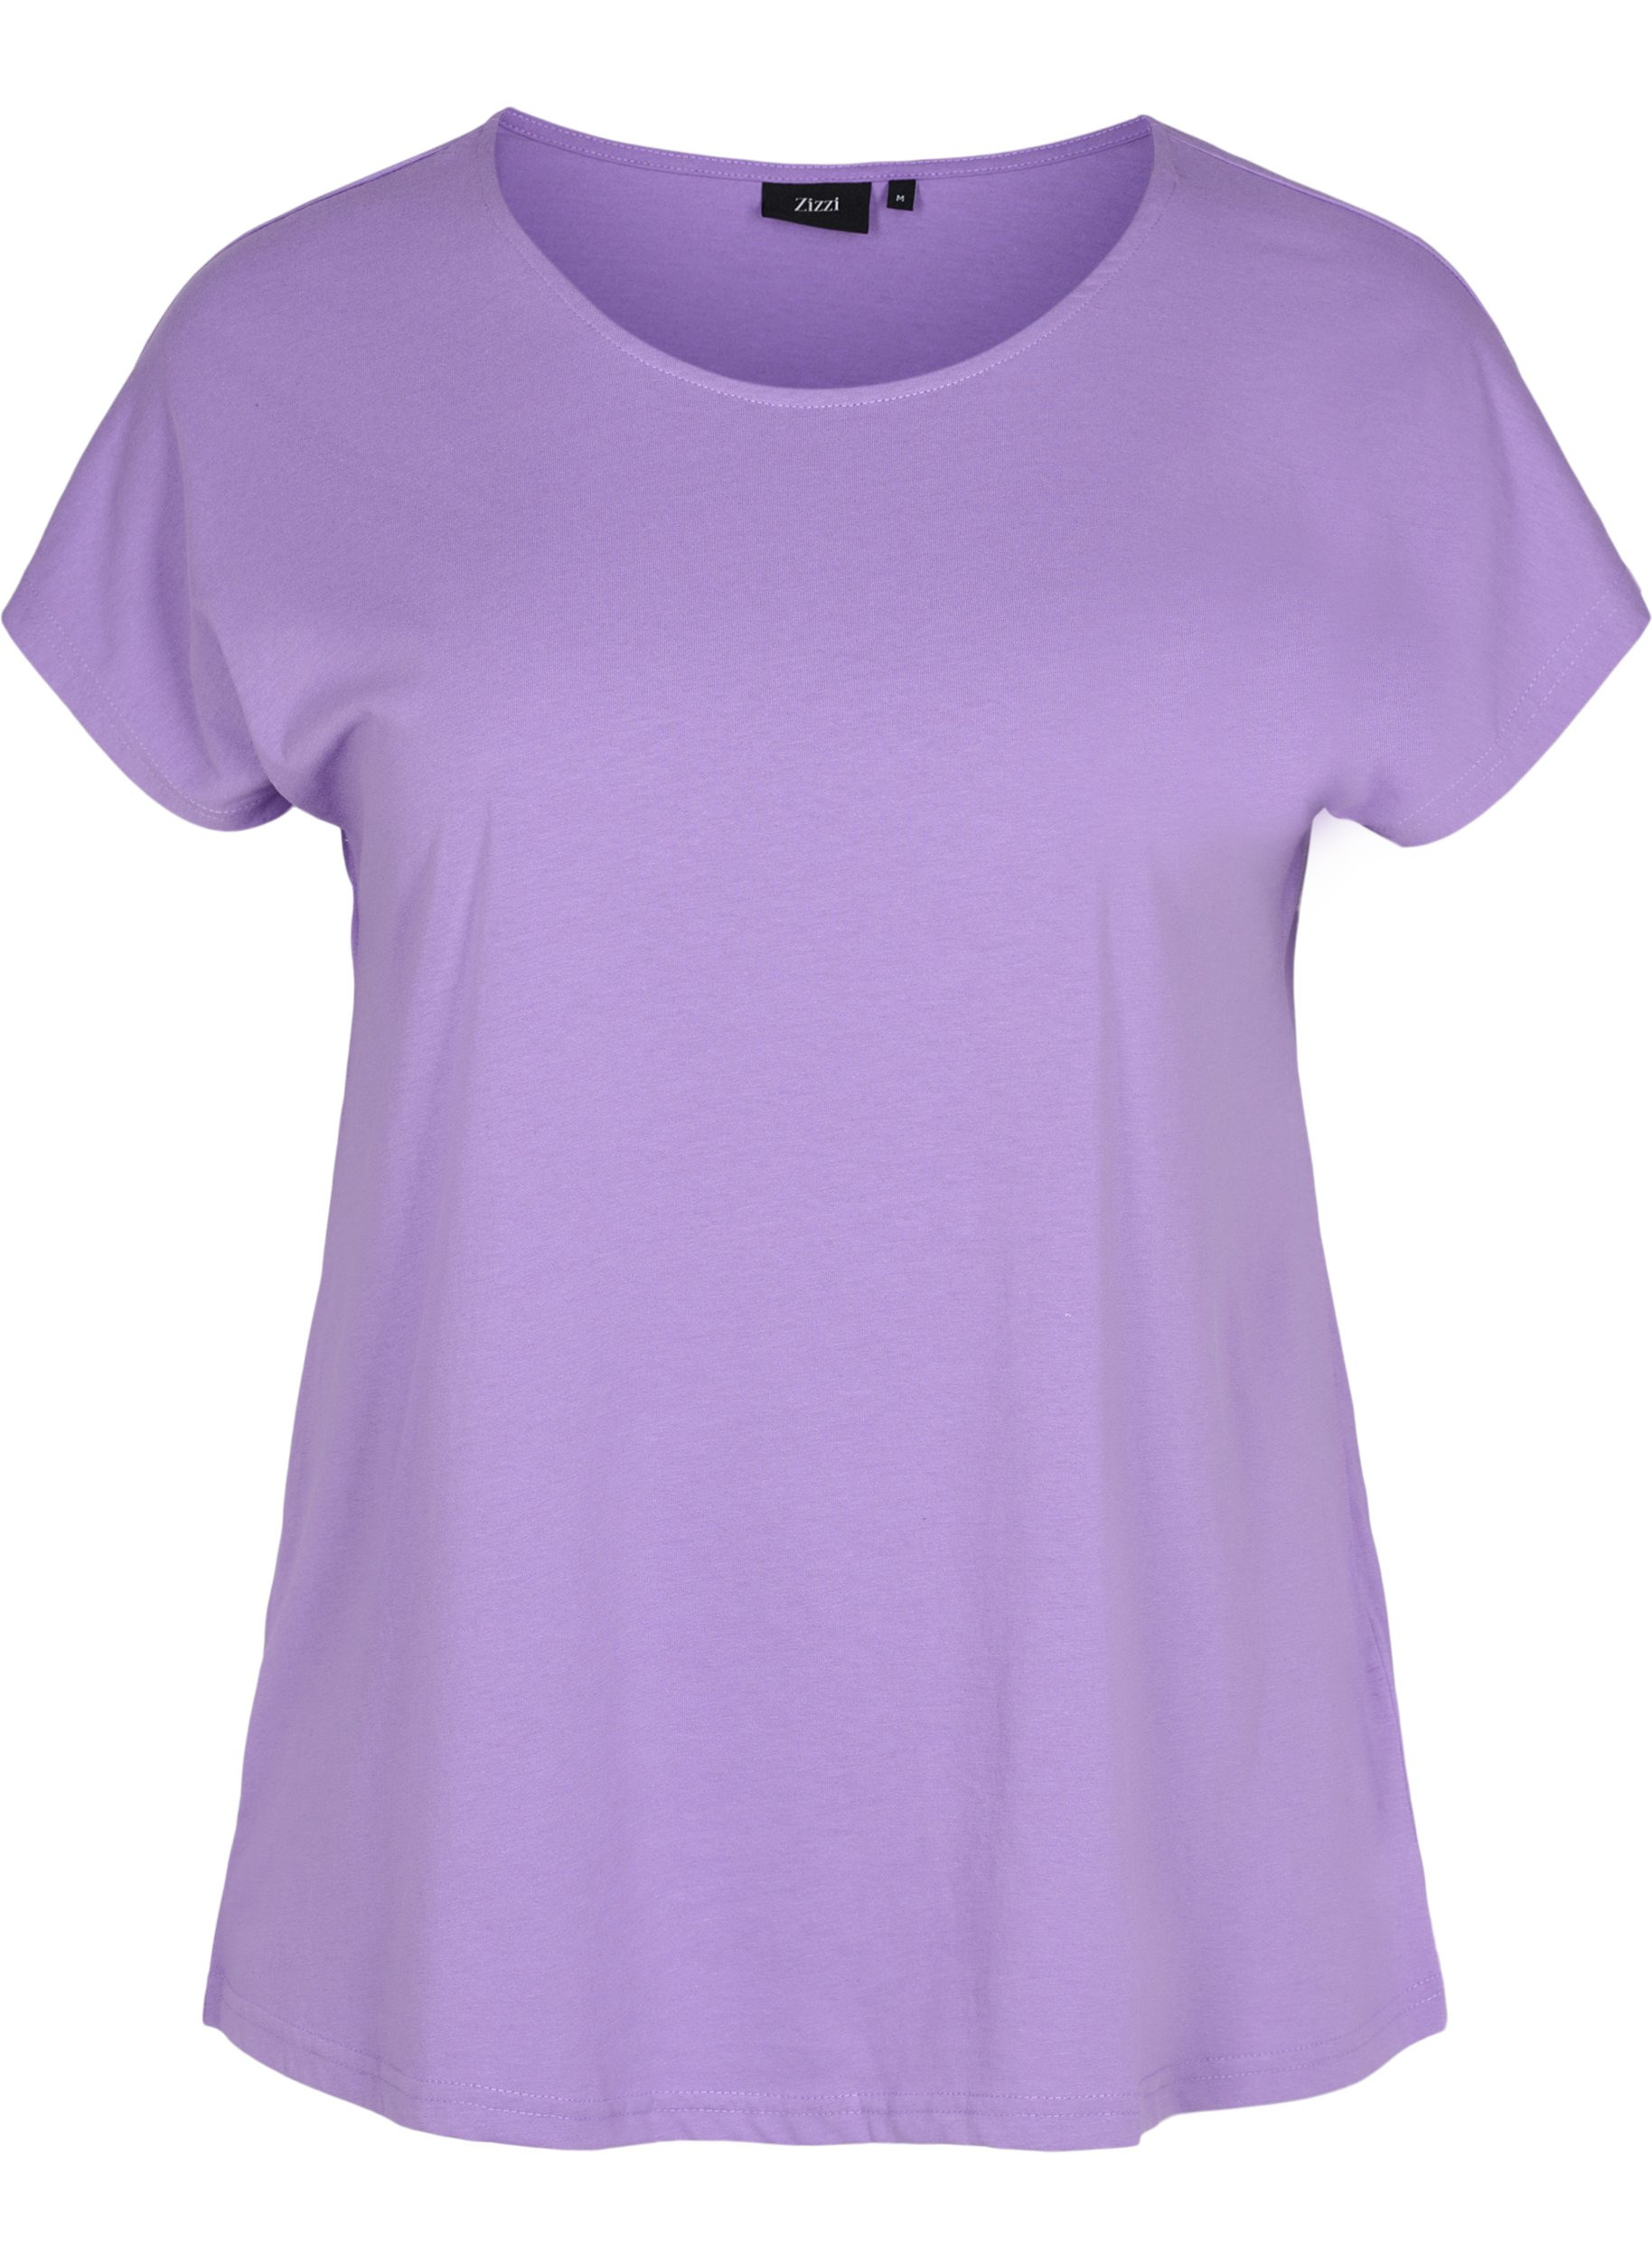 Cotton mix t-shirt, Paisley Purple